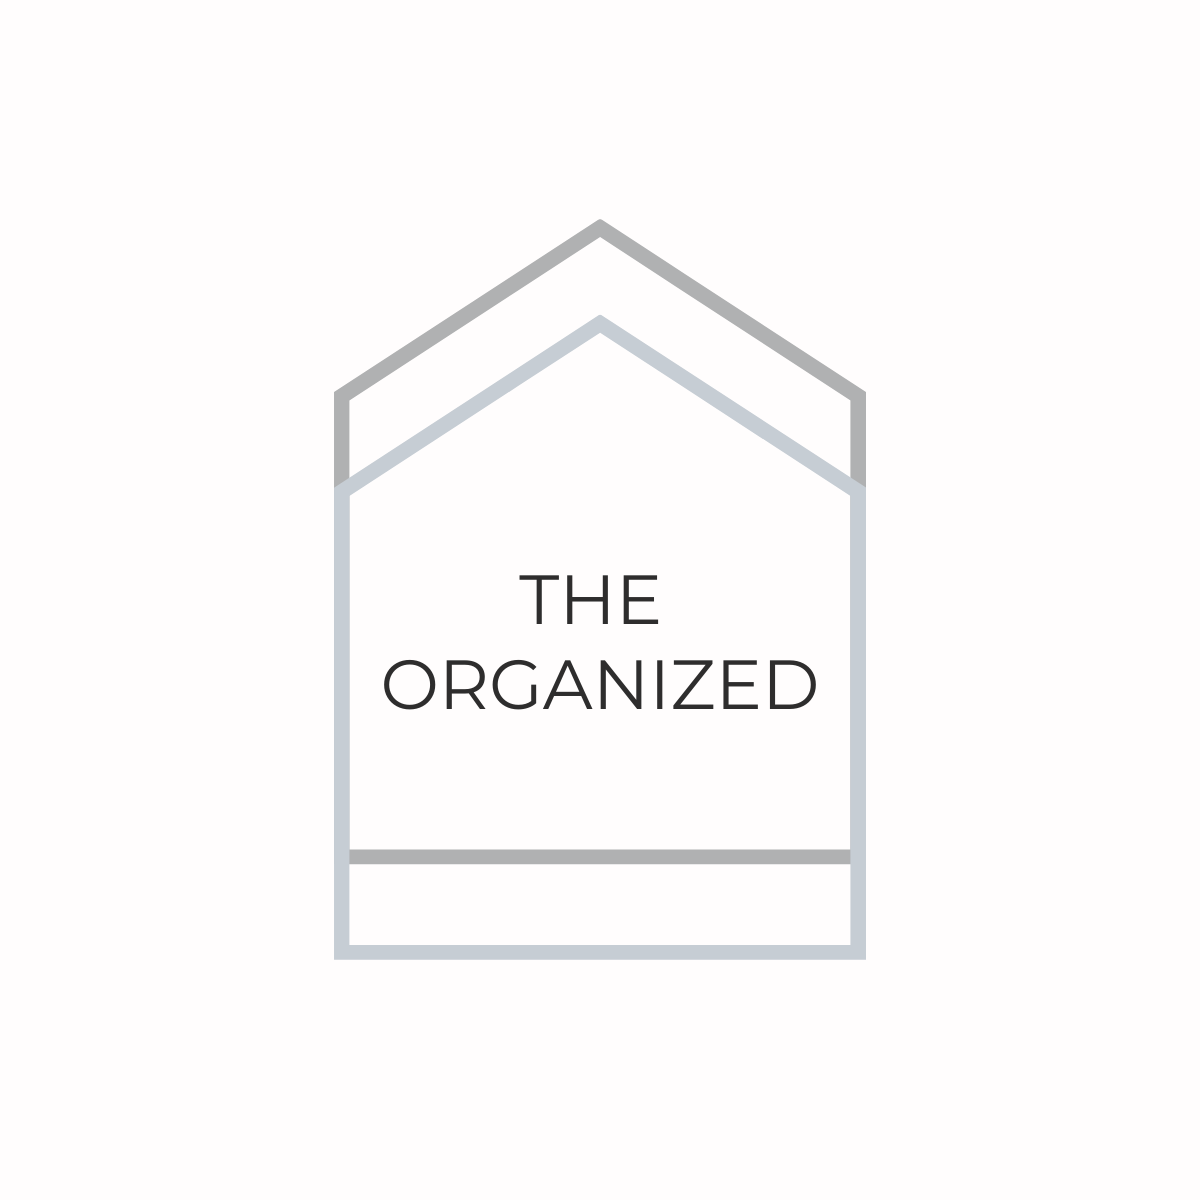 The Organized